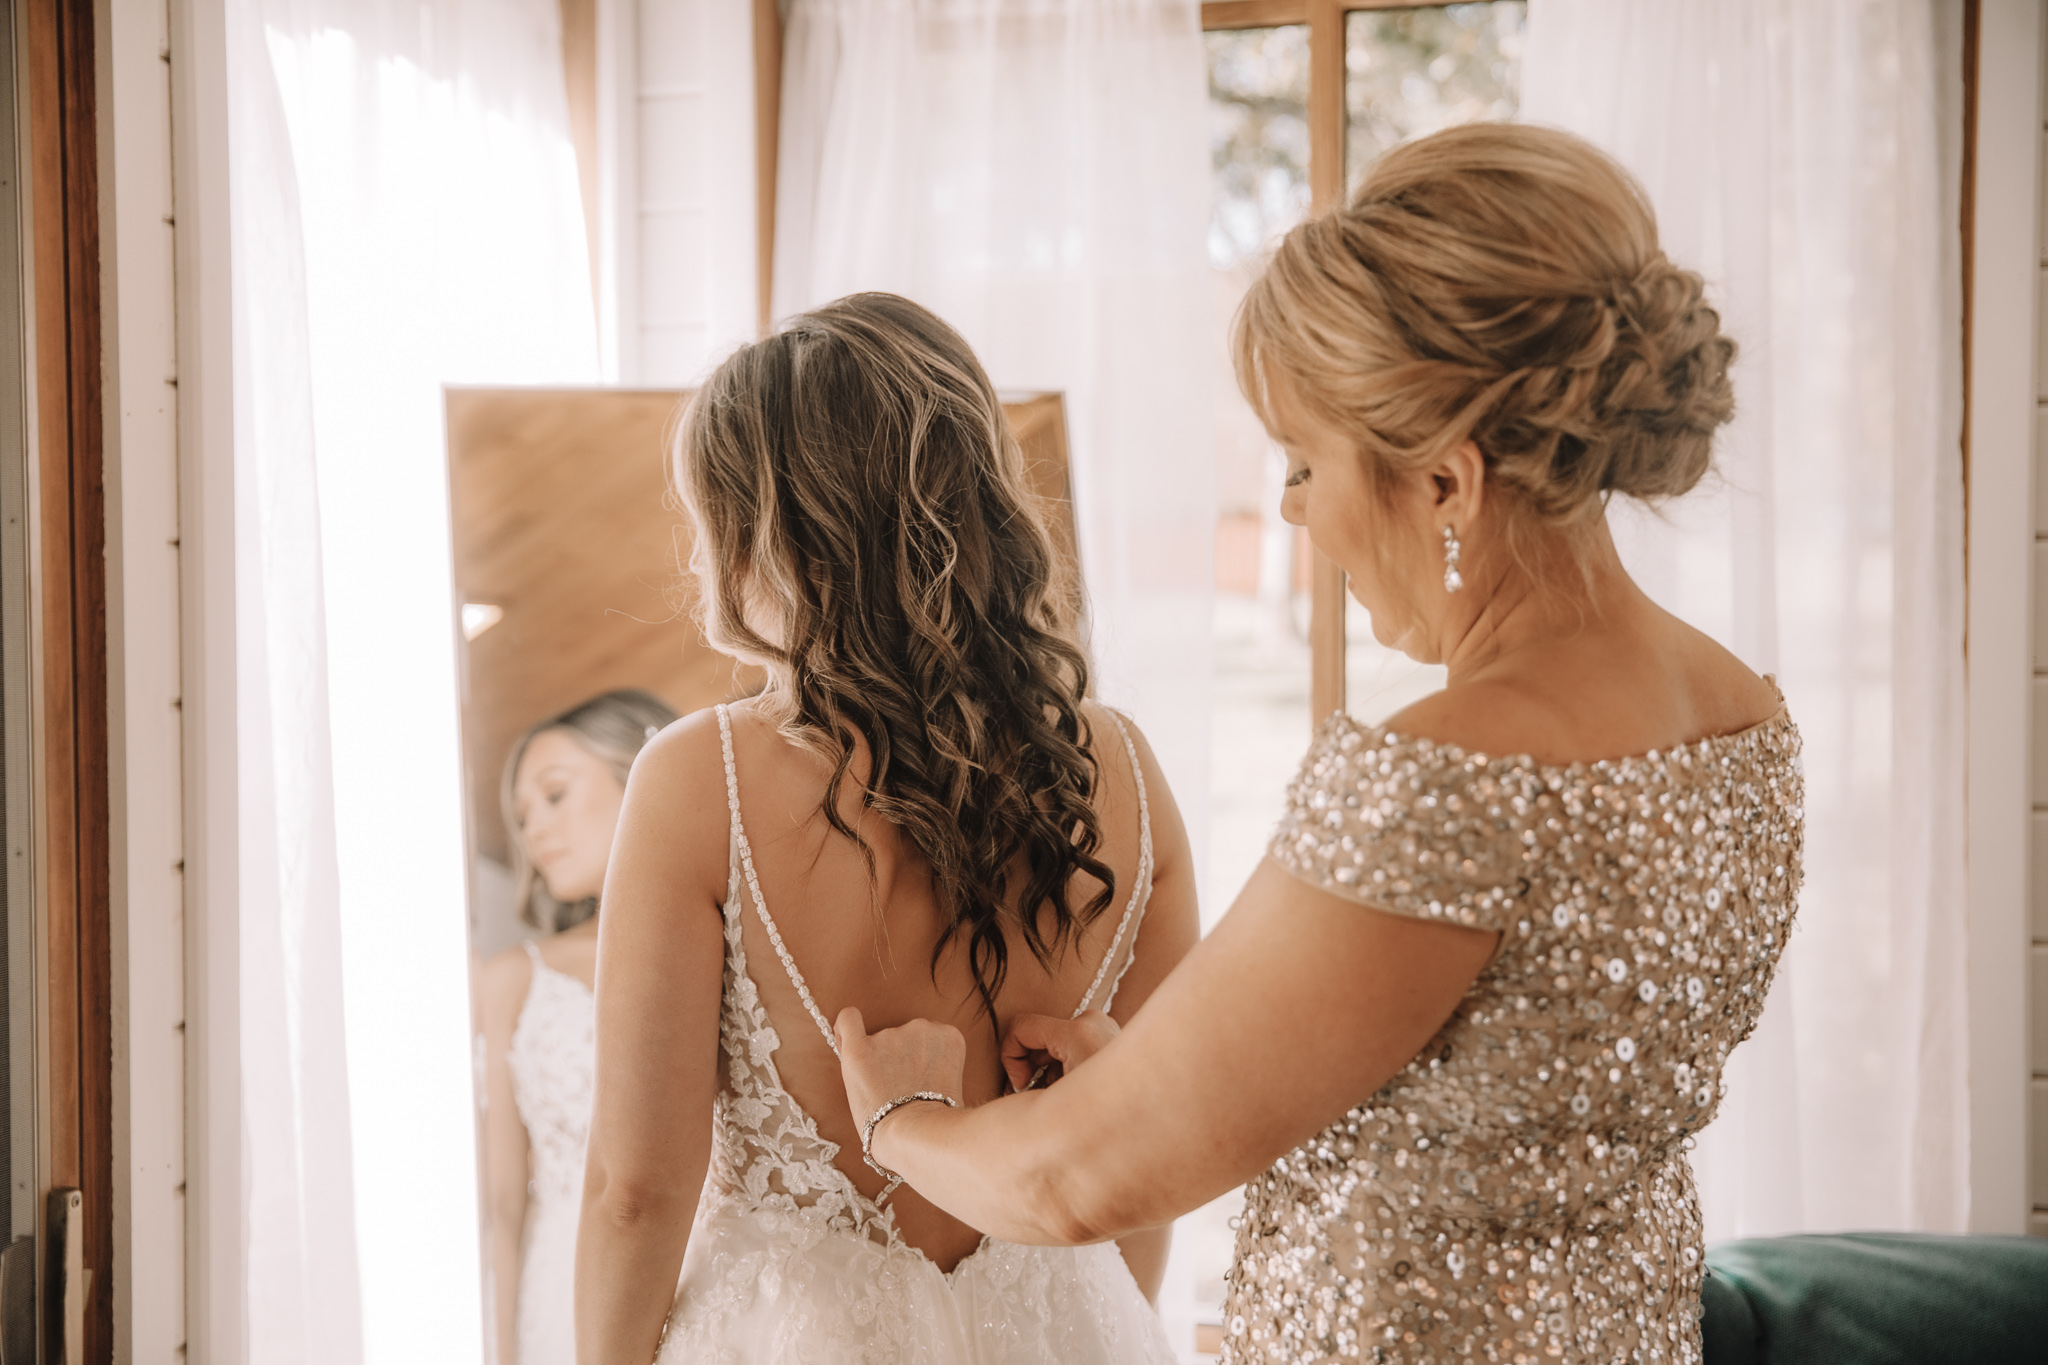 Mother-of-the-bride helping Bride zip up her beautiful open back wedding dress